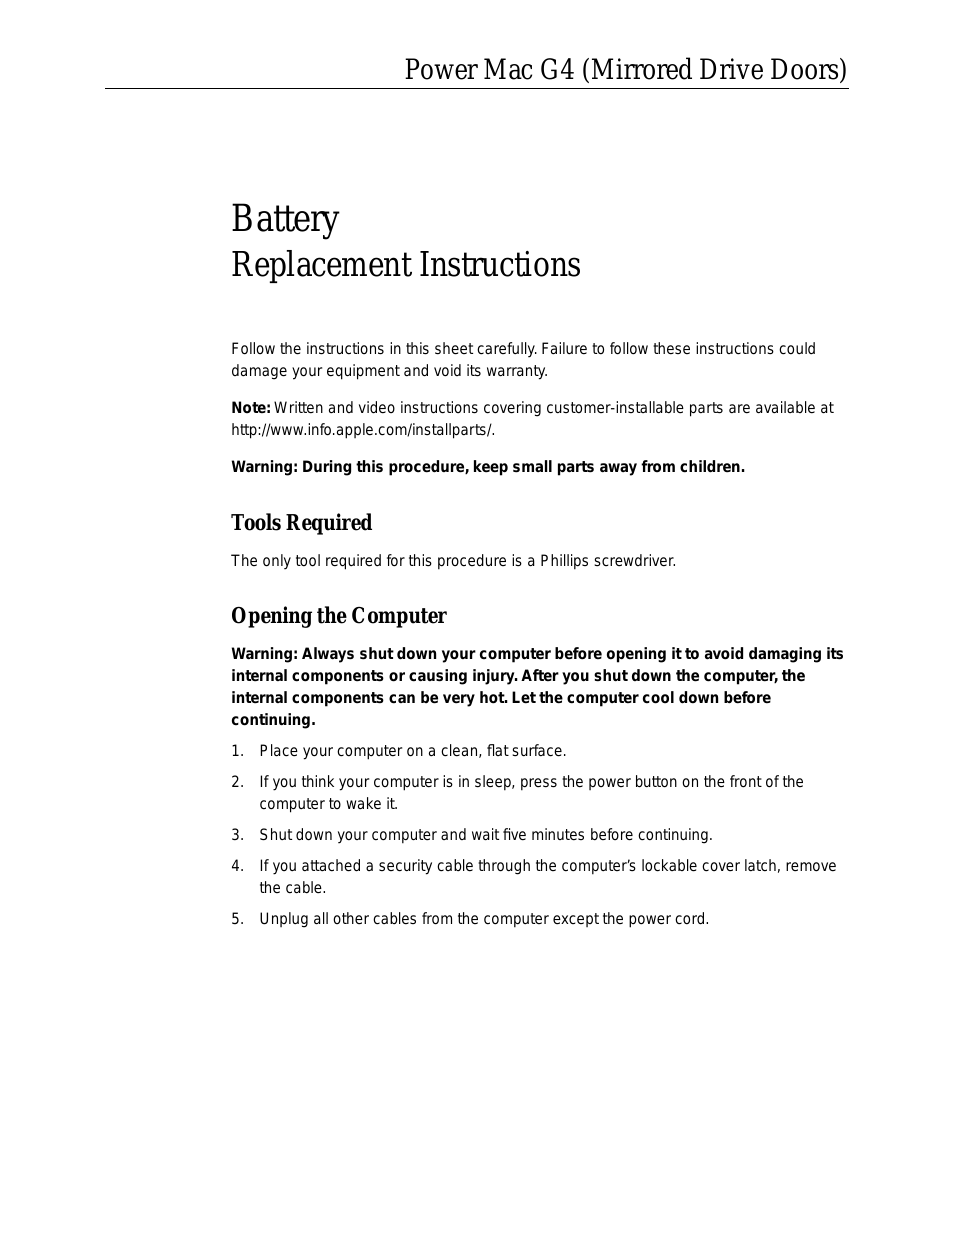 Power Mac G4 (Battery Replacement)